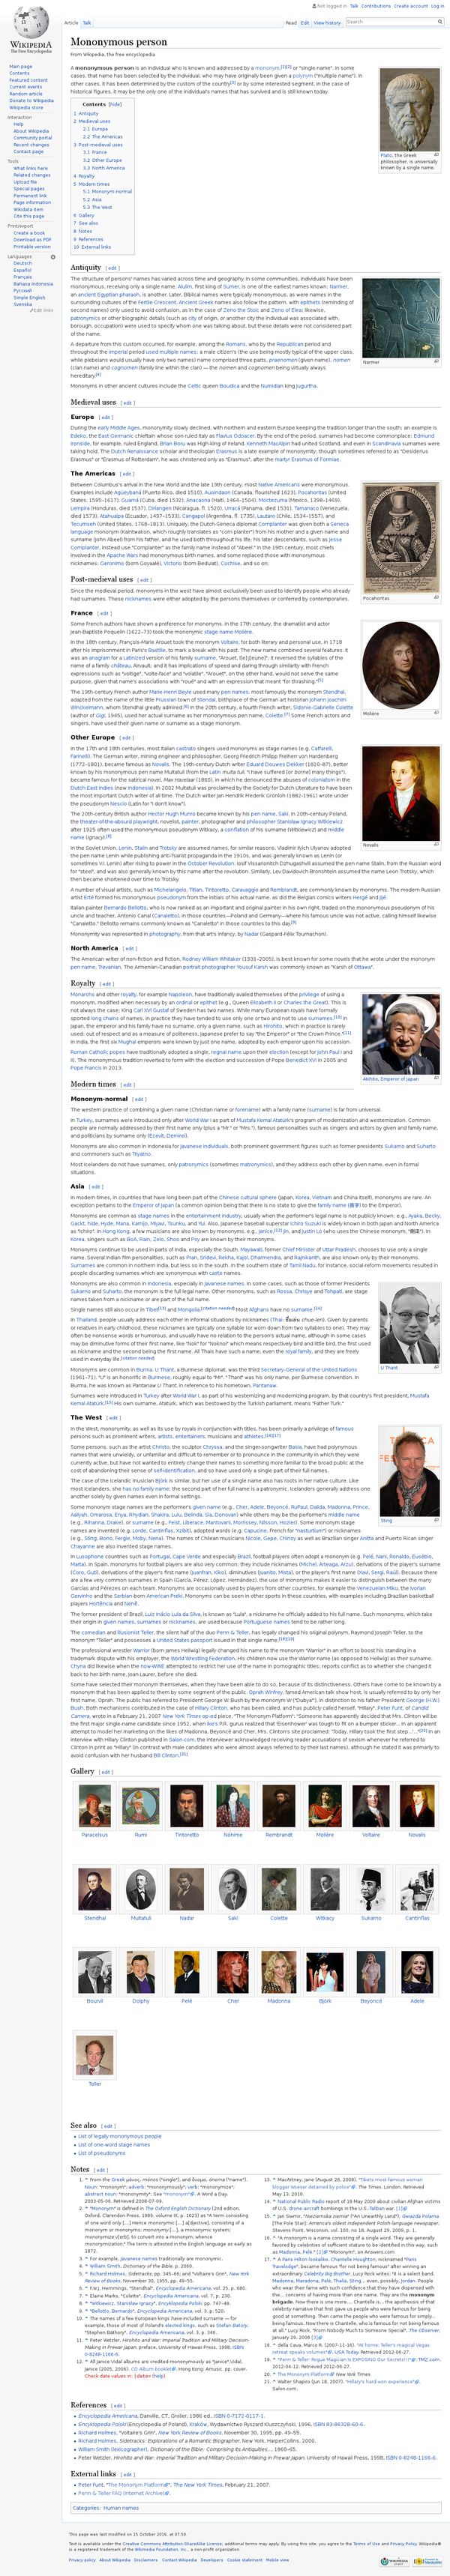 Mononymous person - Wikipedia